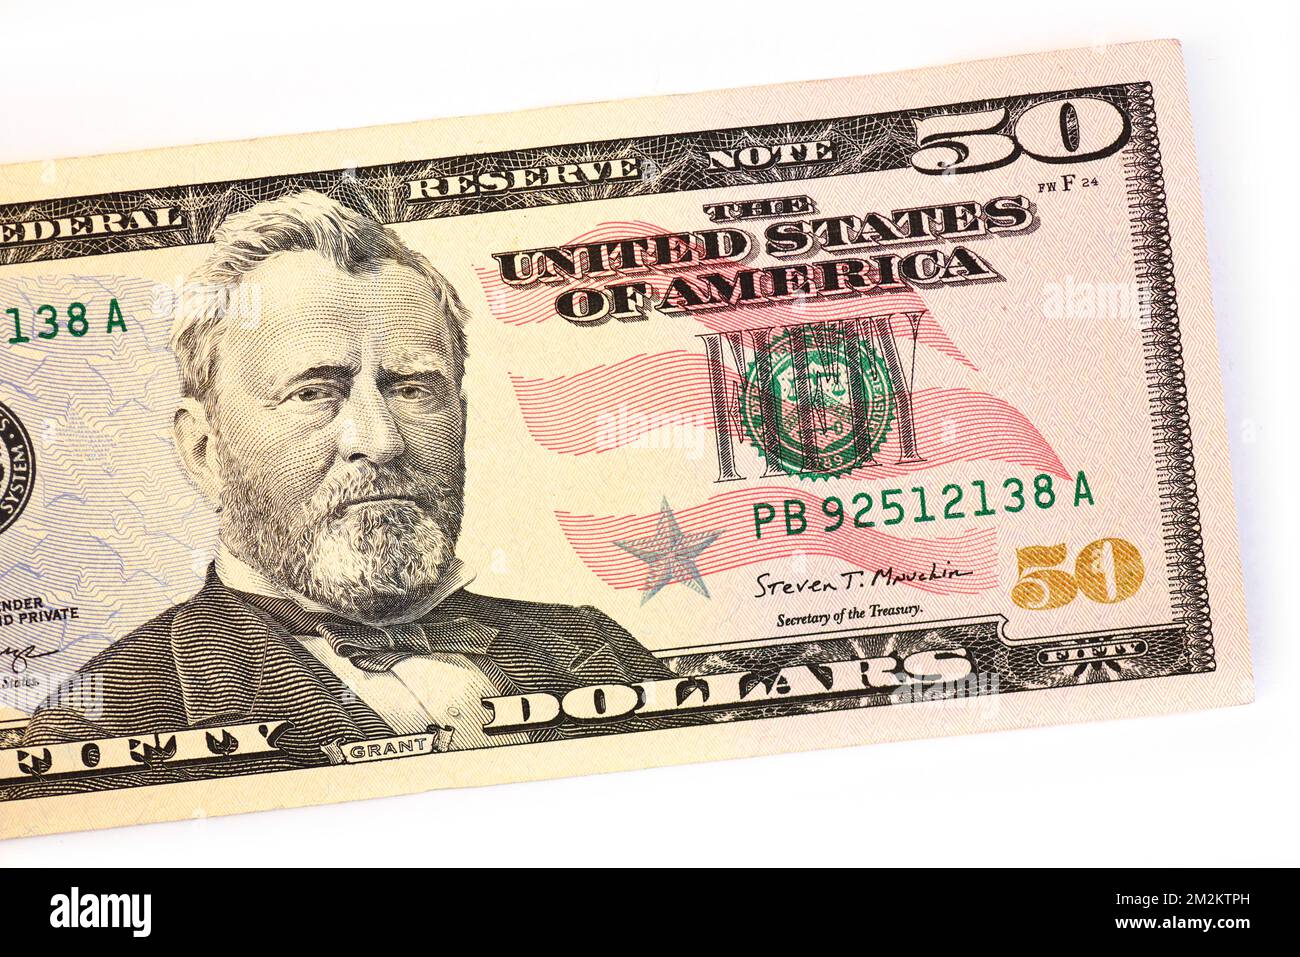 US 50 dollar bill featuring President Ulysses S Grant Stock Photo